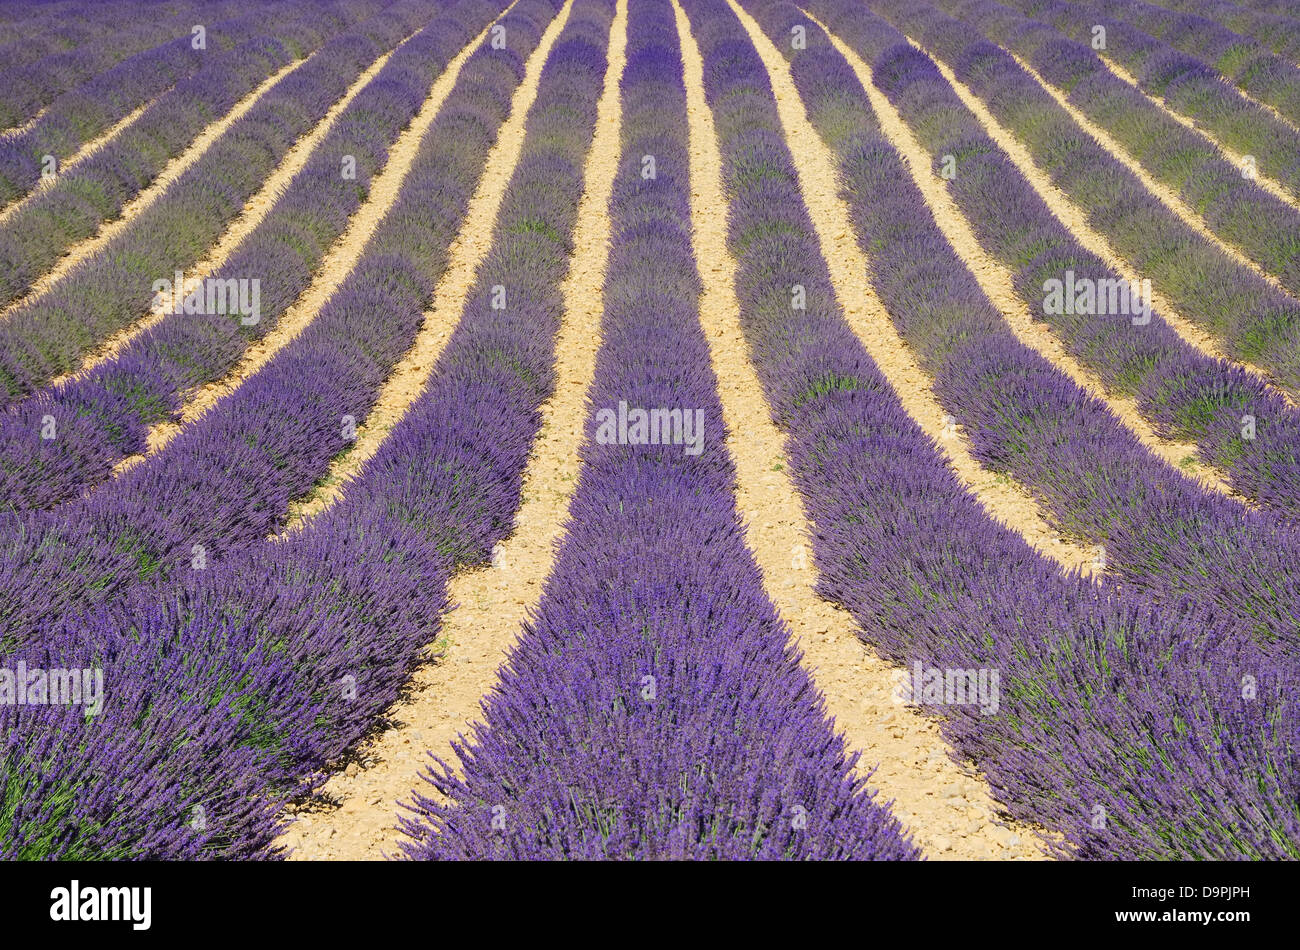 Lavendelfeld - lavender field 08 Stock Photo